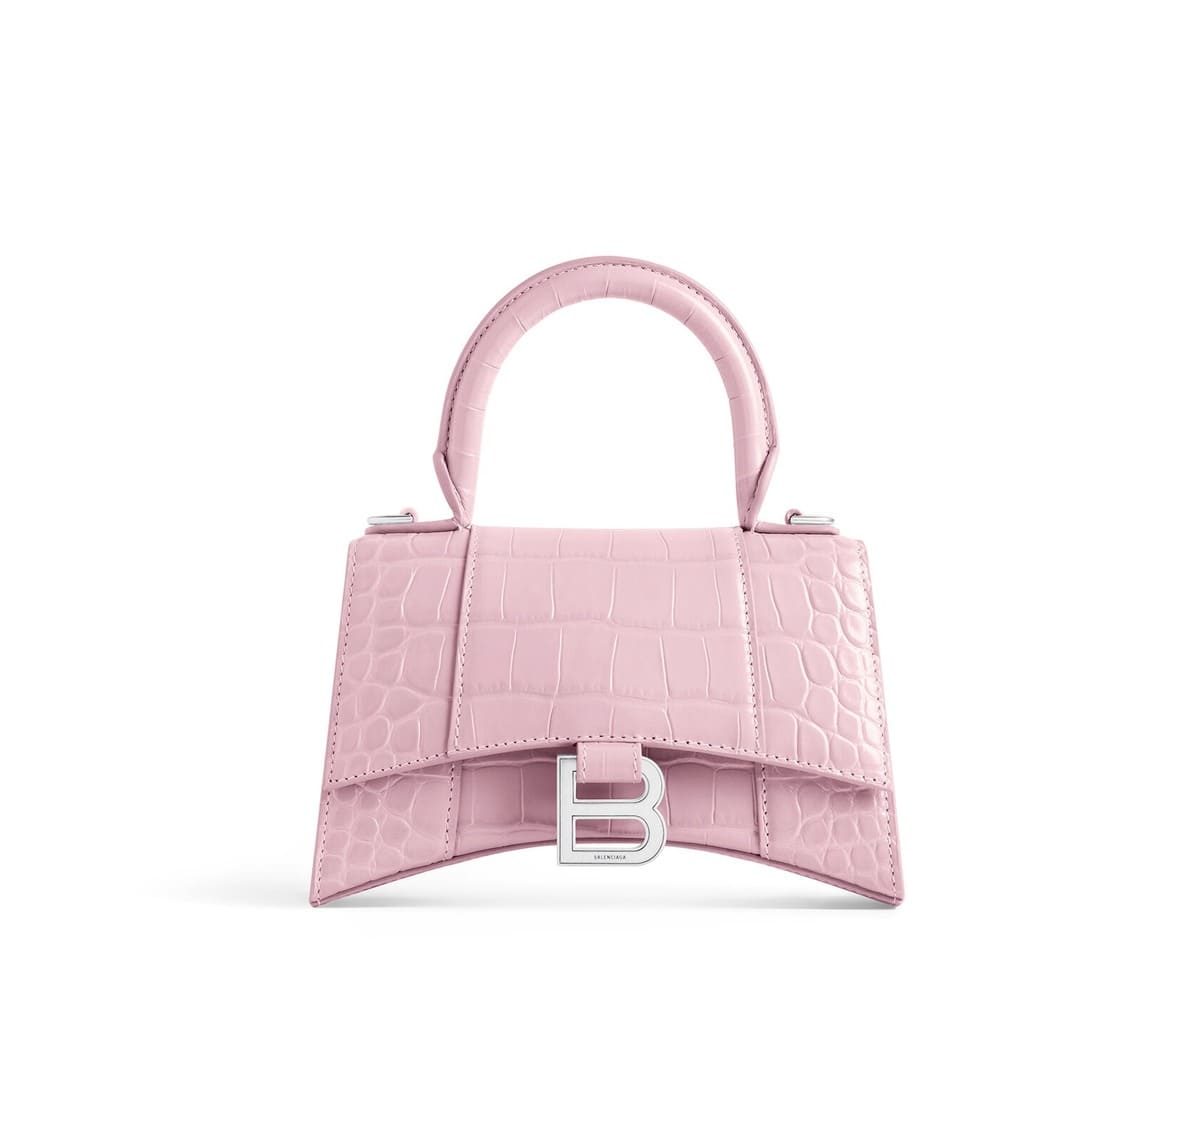 Balenciaga Hourglass XS Bag in Croc Embossed light pink